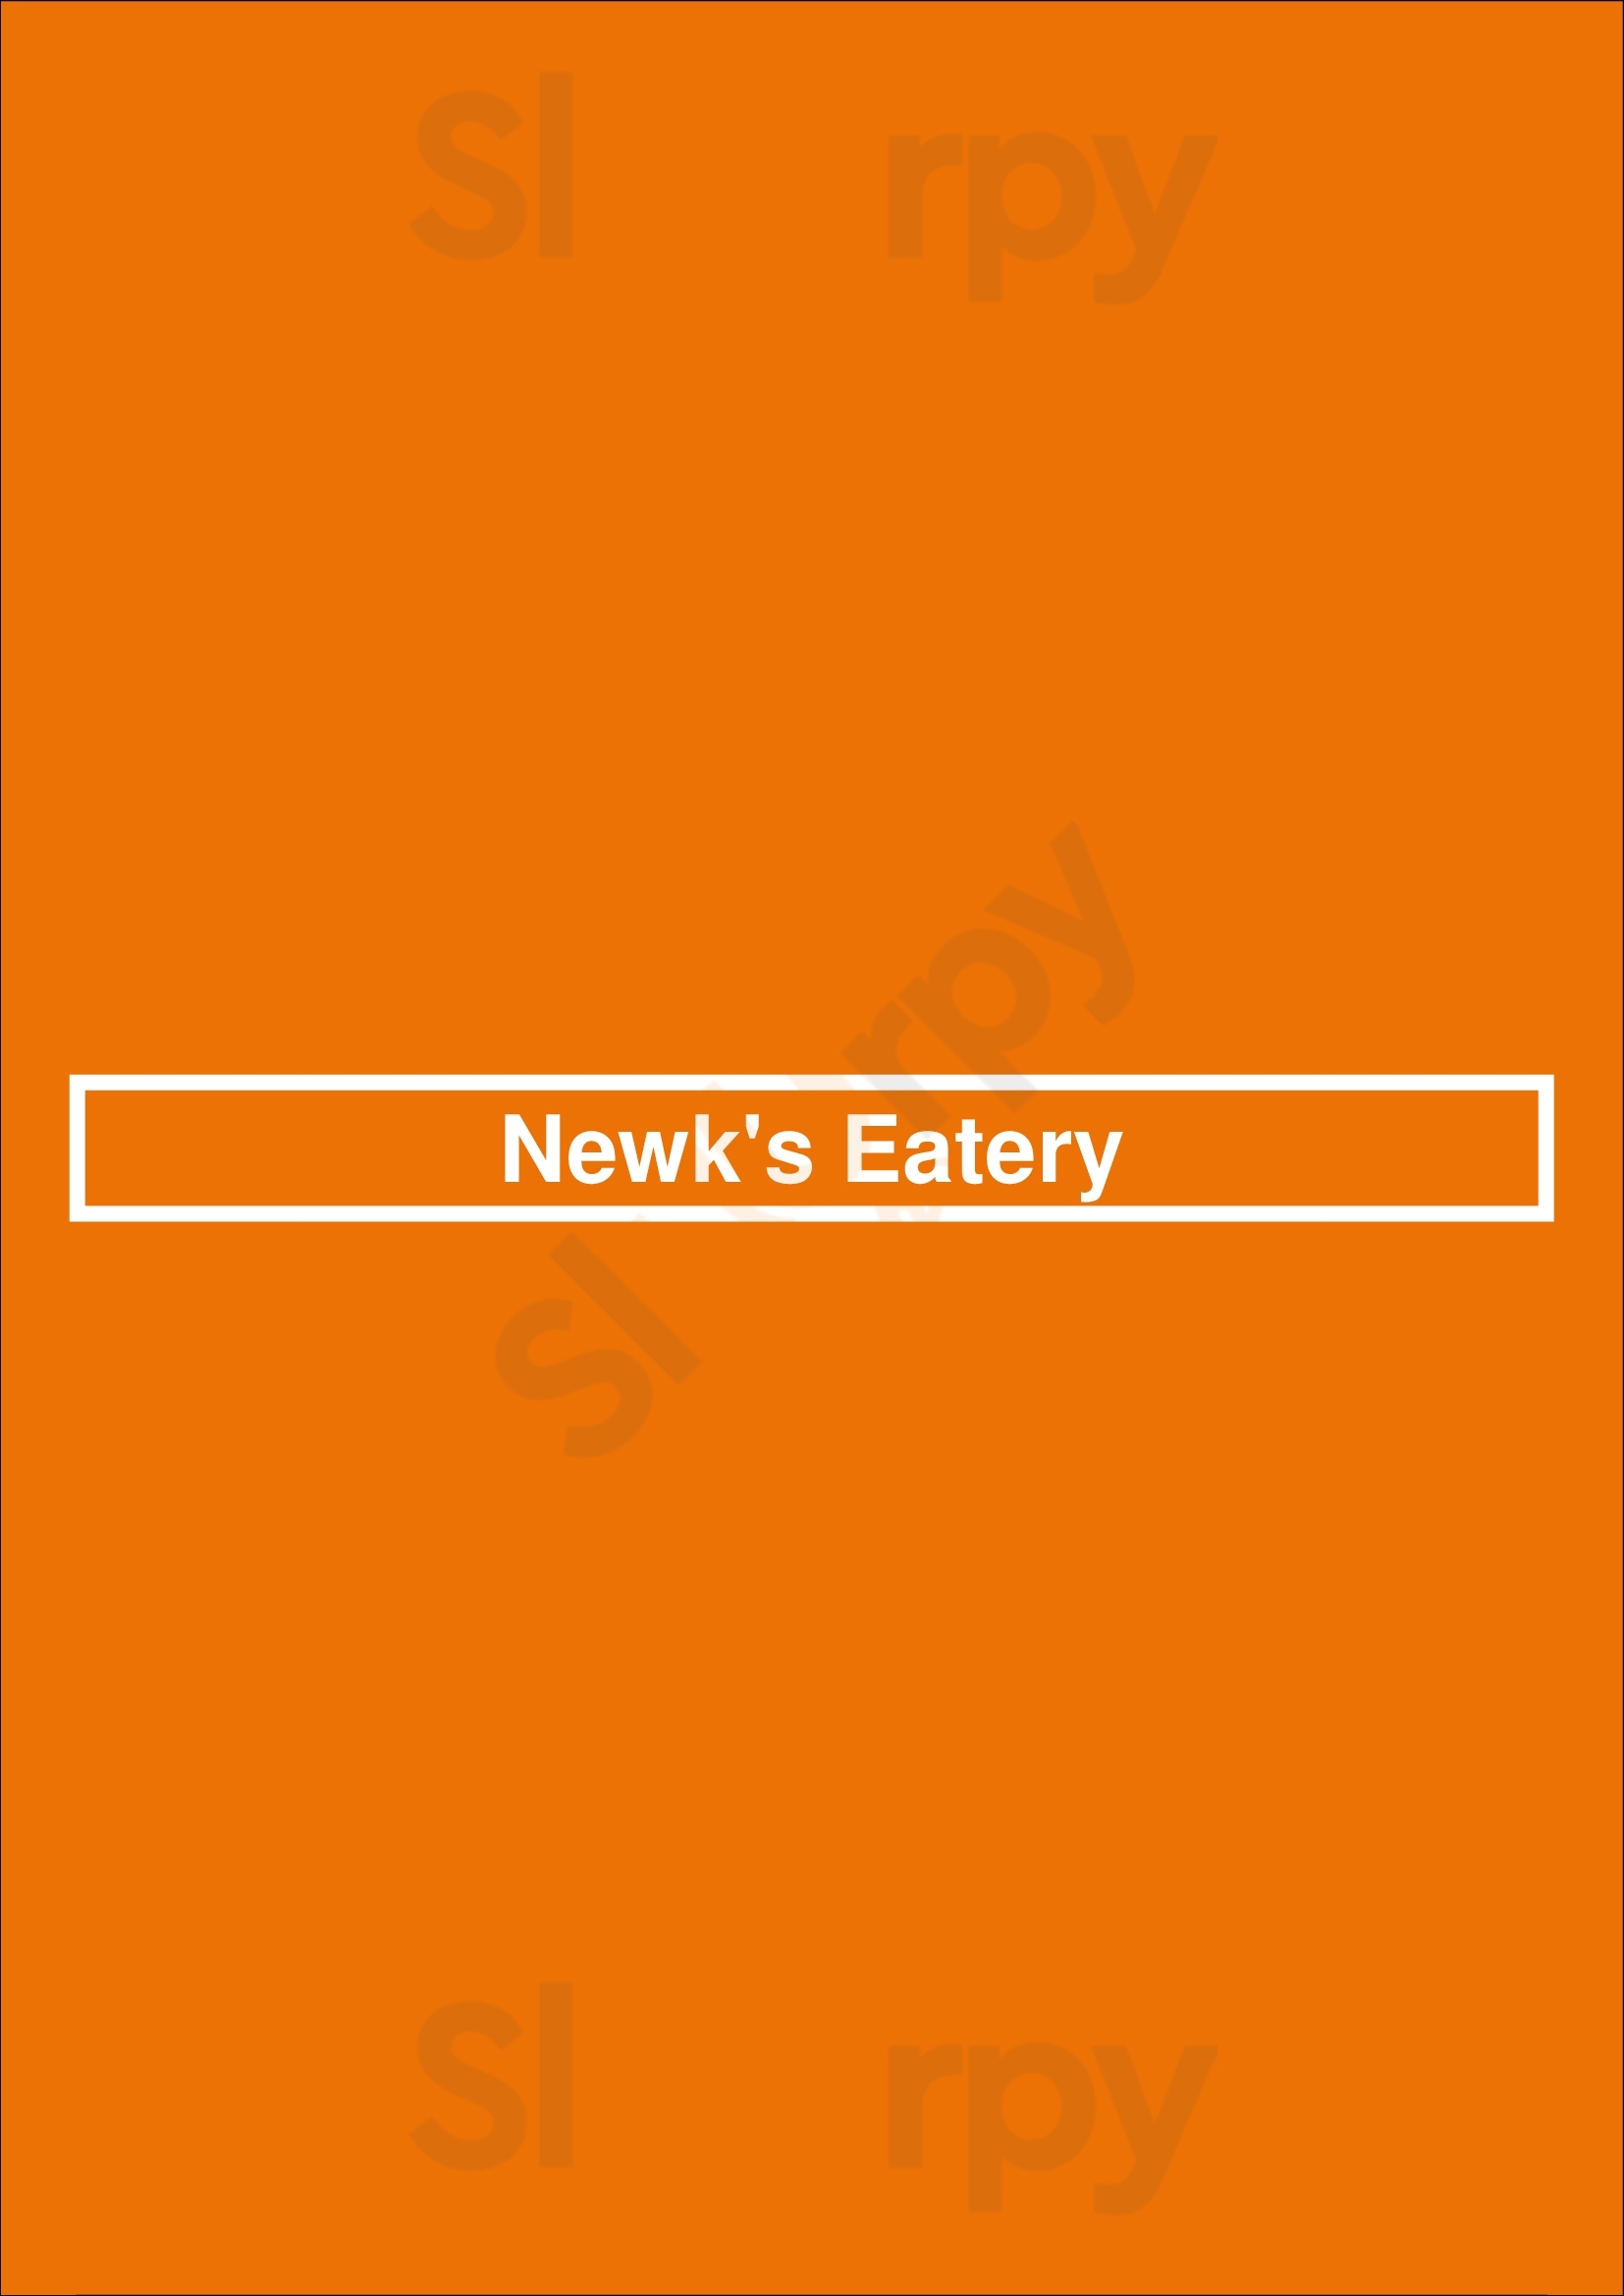 Newk's Eatery Canton Menu - 1